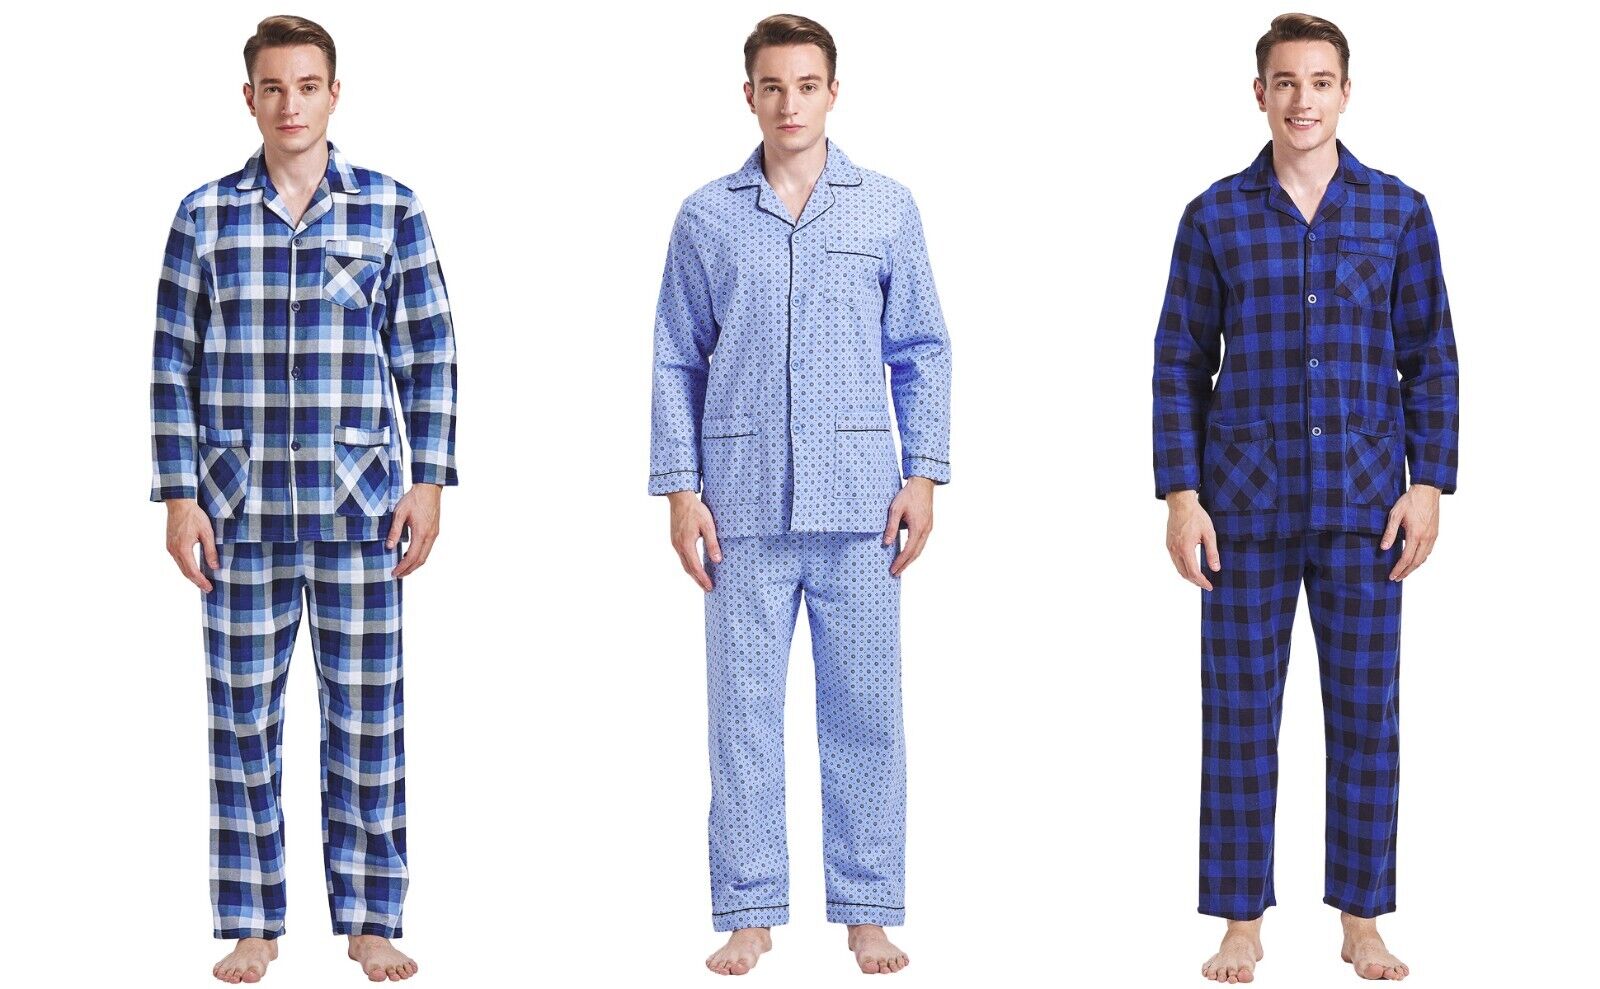 Men 100% Cotton Pajamas Set Long Sleeve Pjs Button Fly Pants Sleepwear Lounge